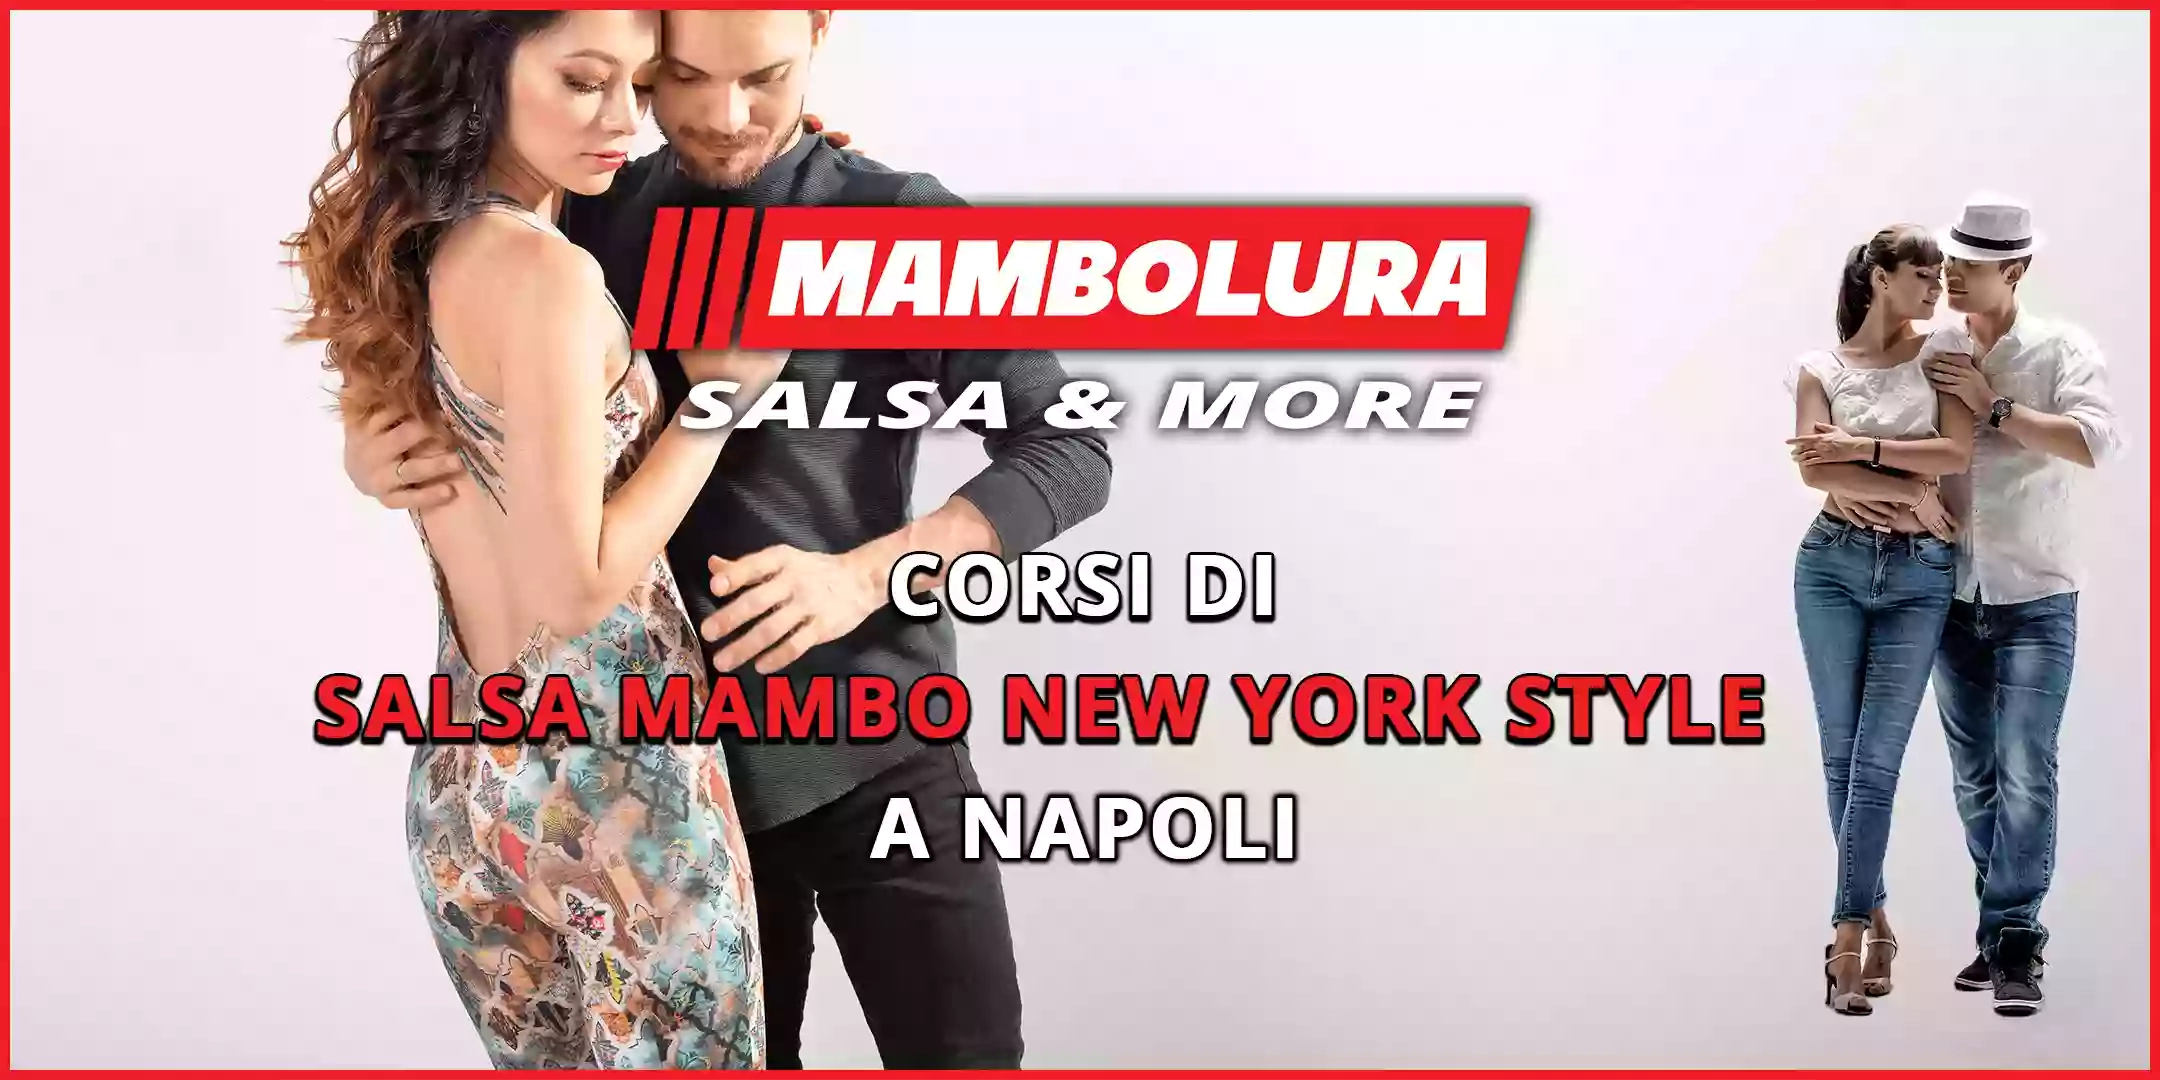 Mambolura "Salsa & More"